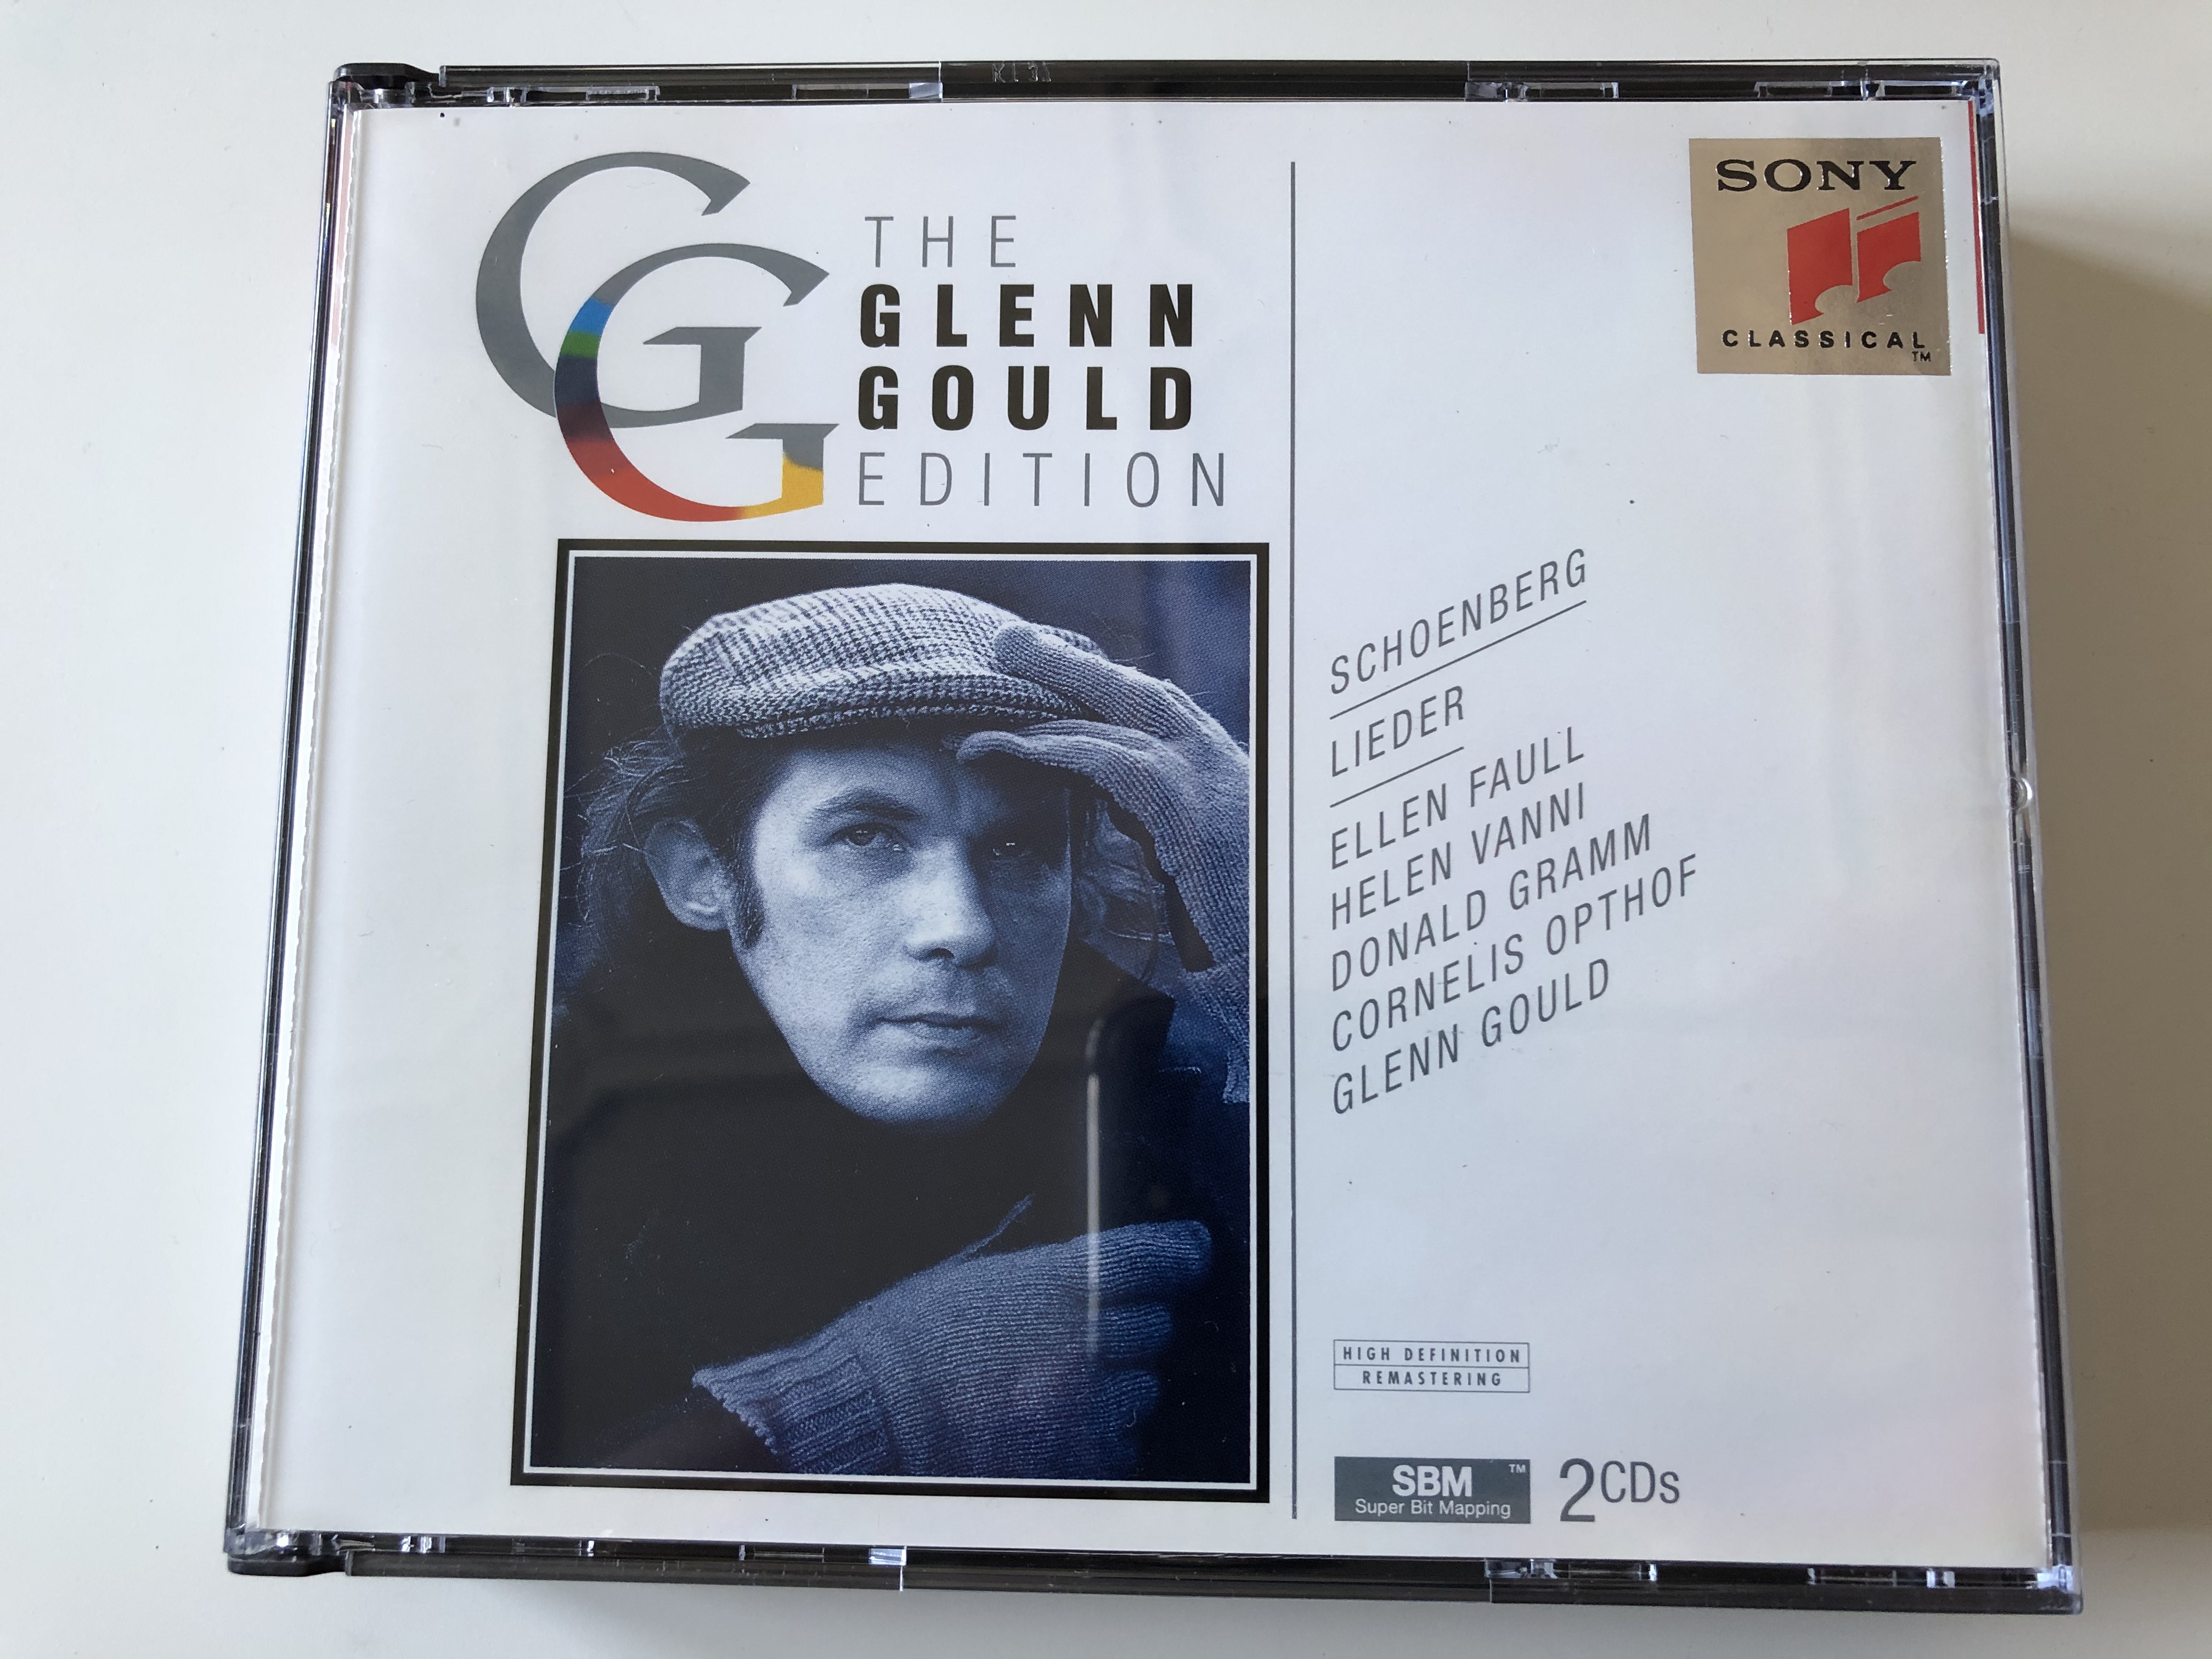 the-glenn-gould-edition-schoenberg-lieder-ellen-faull-helen-vanni-donald-gramm-cornelius-opthof-glenn-gould-sony-classical-2x-audio-cd-1995-sm2k-52667-1-.jpg